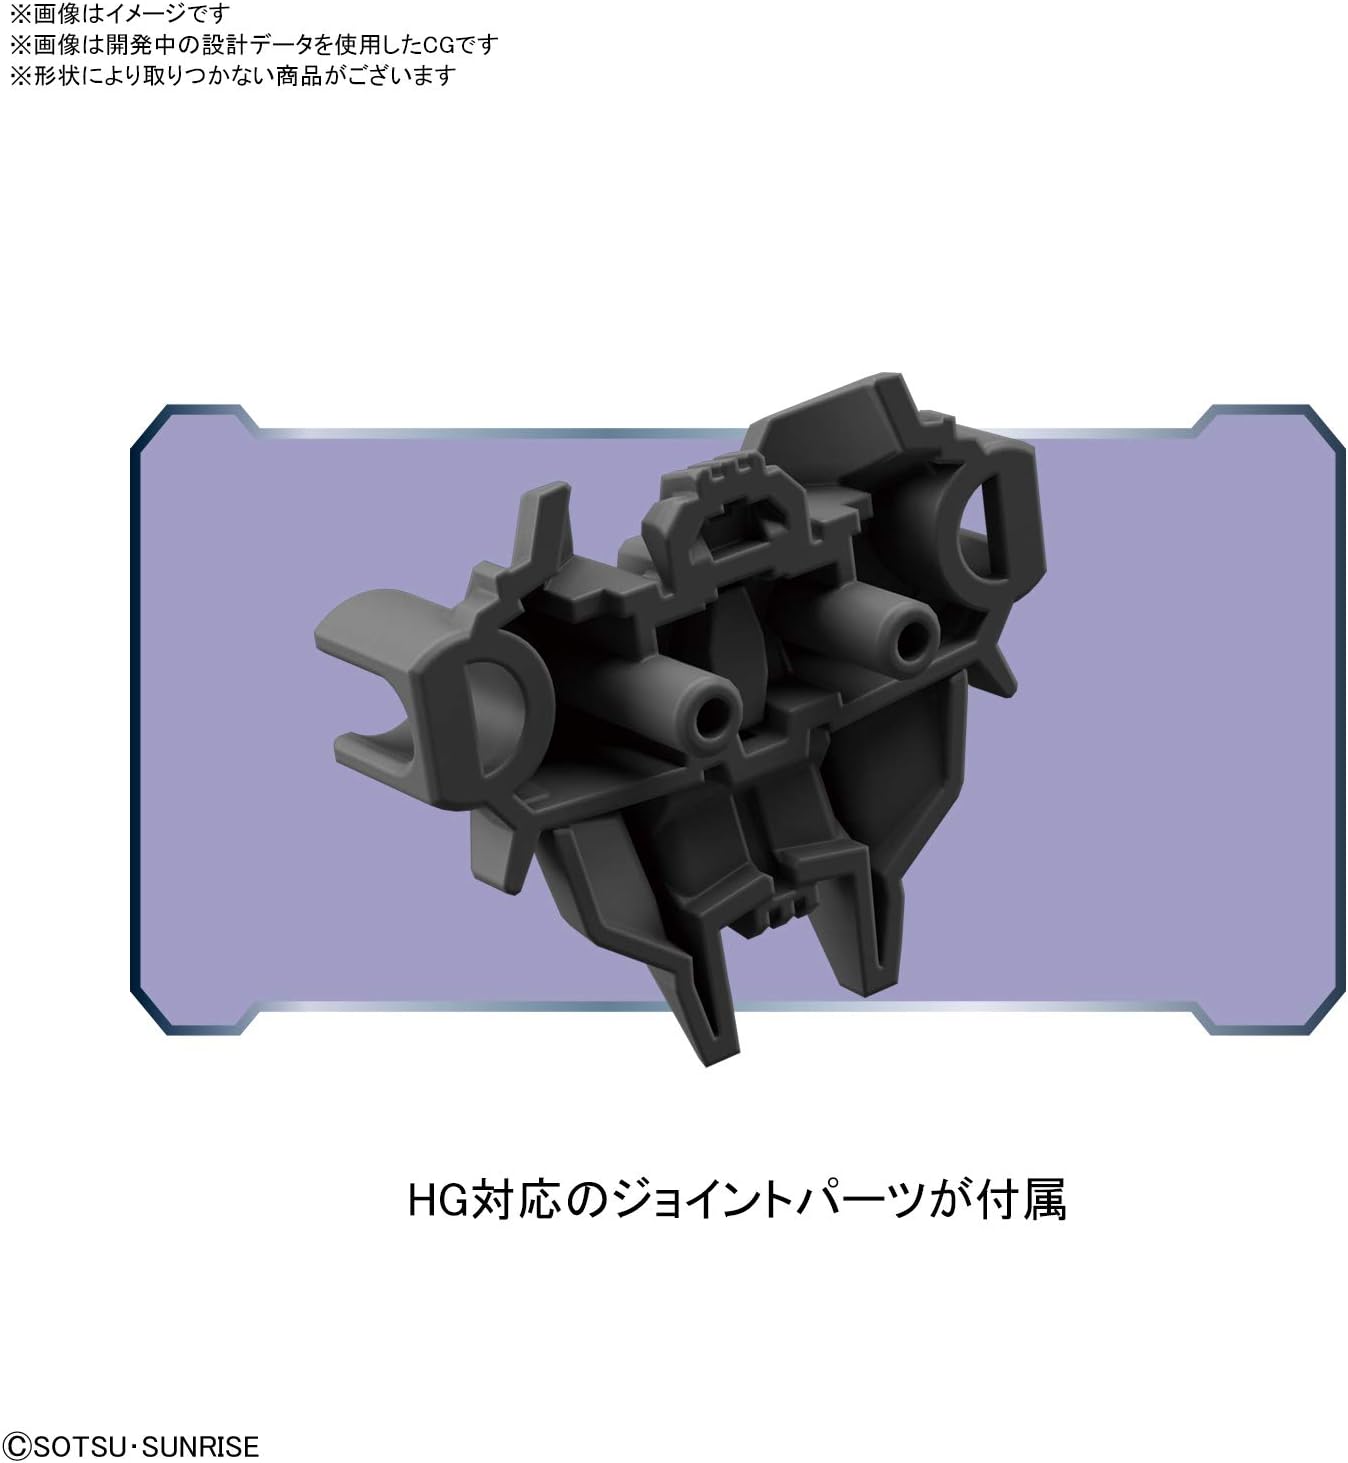 1/144 HGBD:R "Gundam Build Divers Re:Rise" Double Rebake Rifle | animota